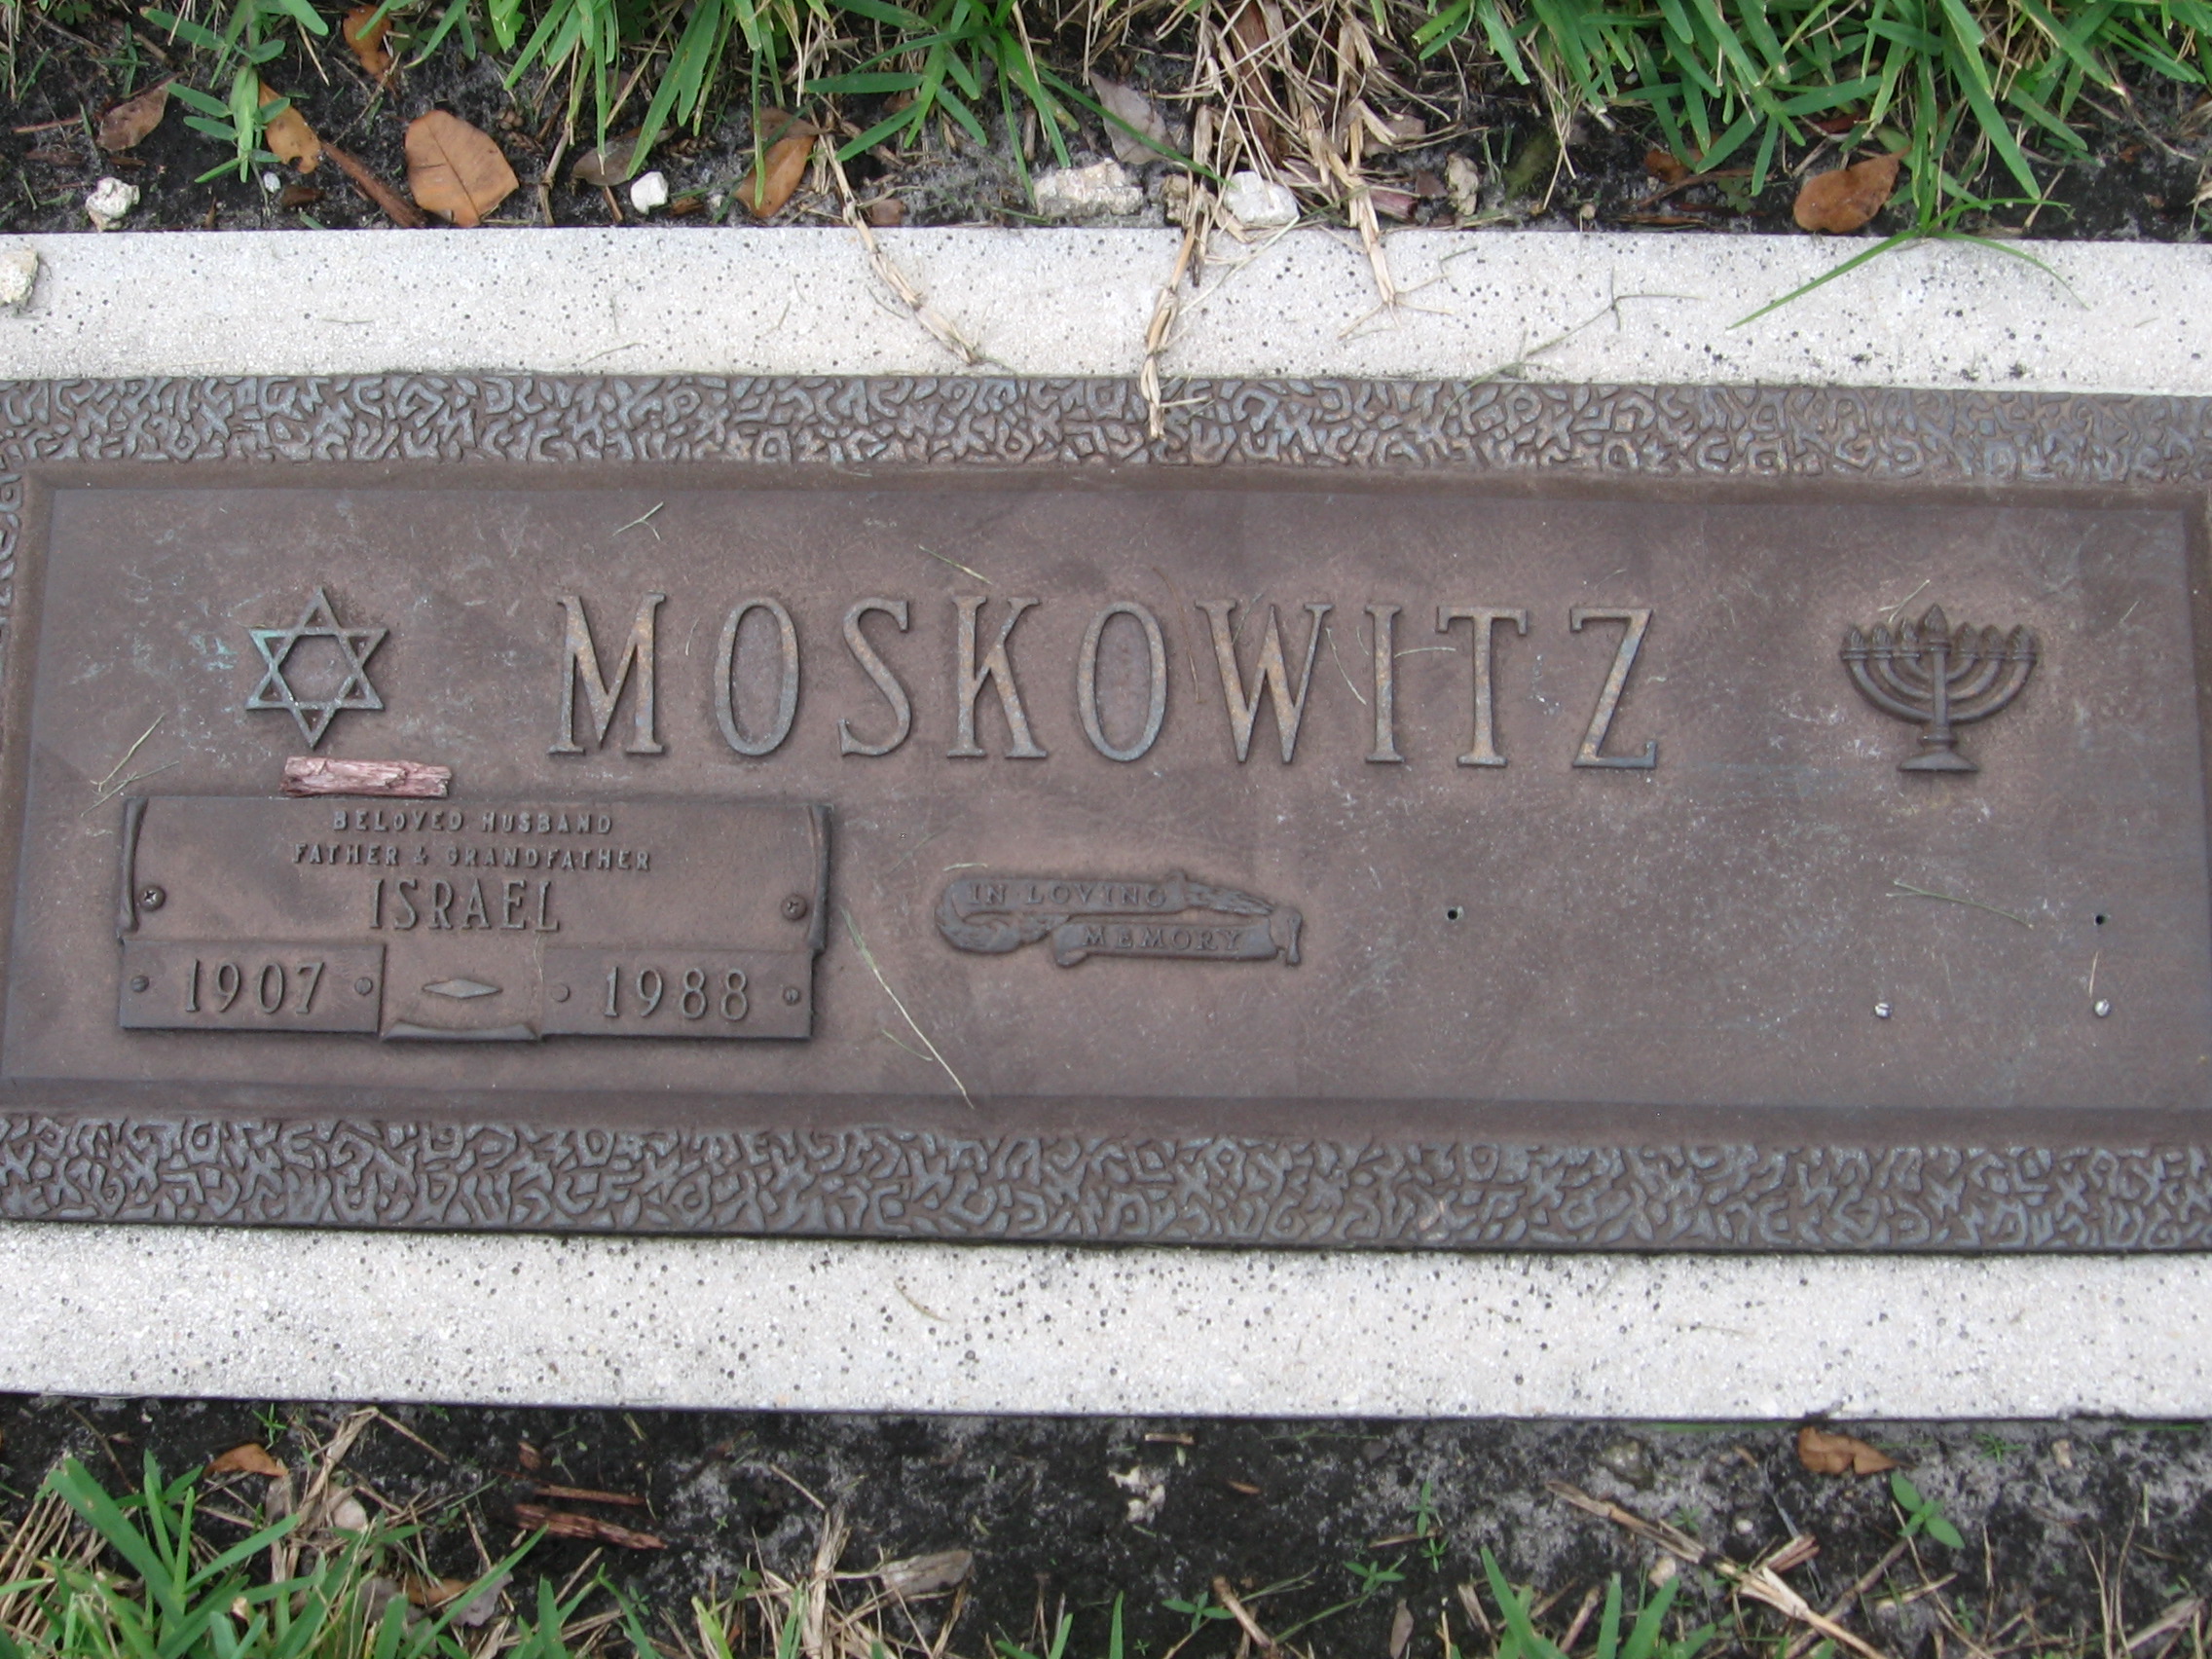 Israel Moskowitz